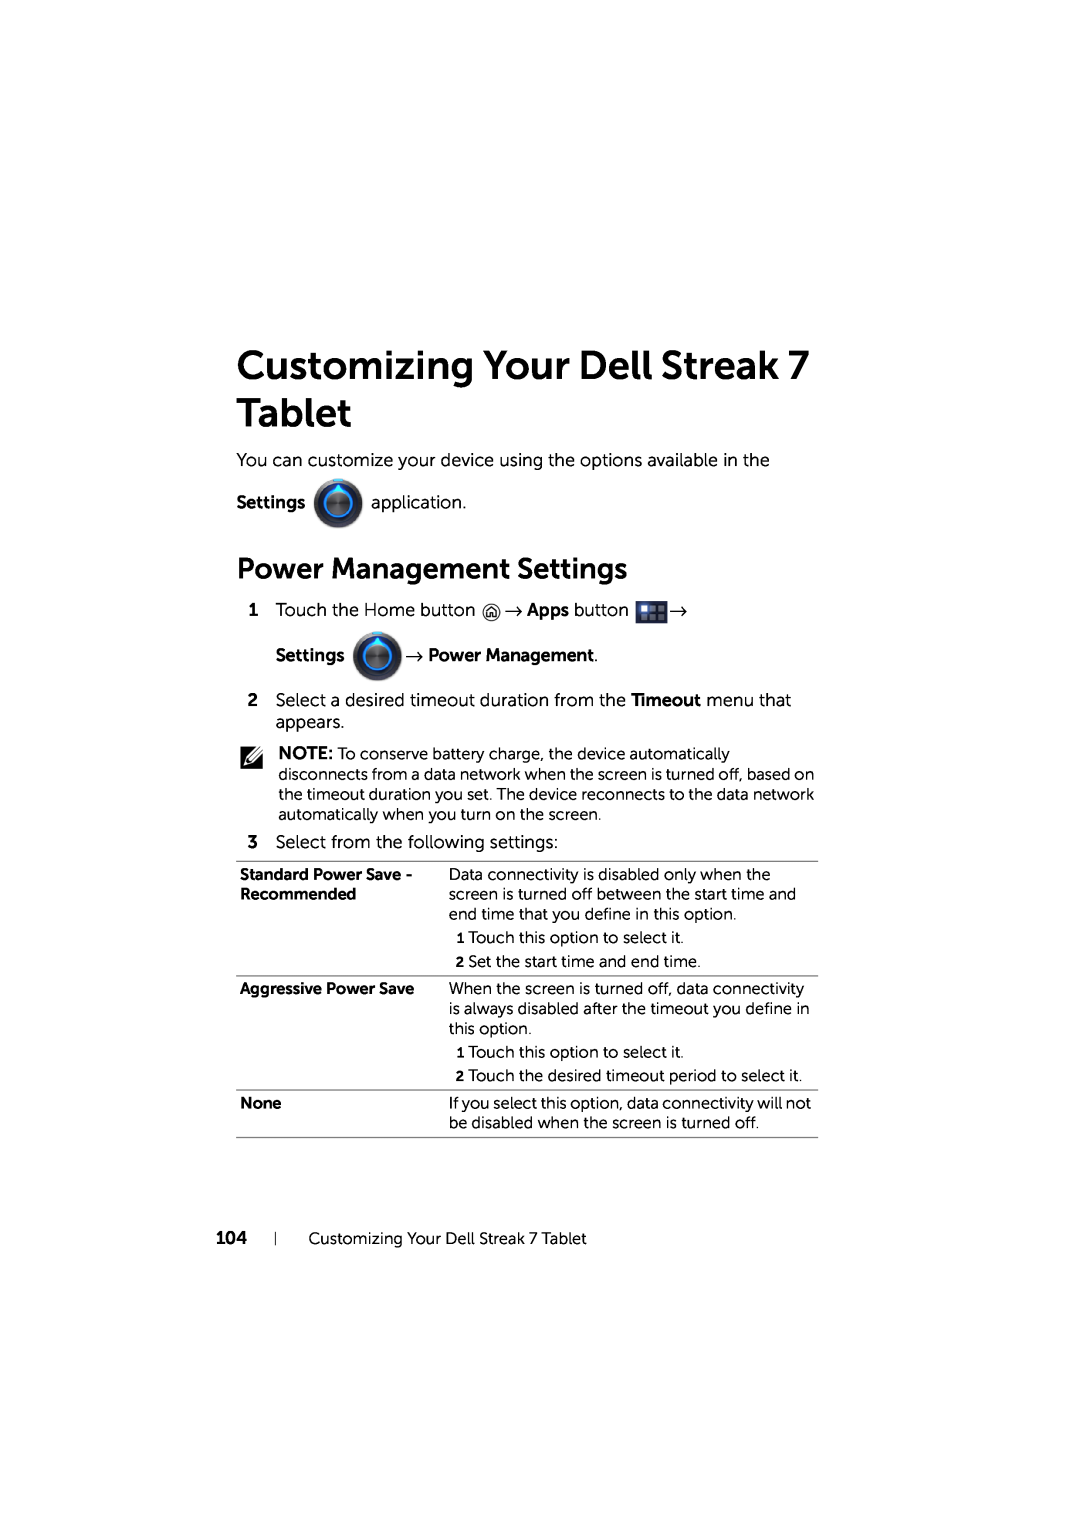 Dell LG7_bk0 user manual Customizing Your Dell Streak 7 Tablet, Power Management Settings 